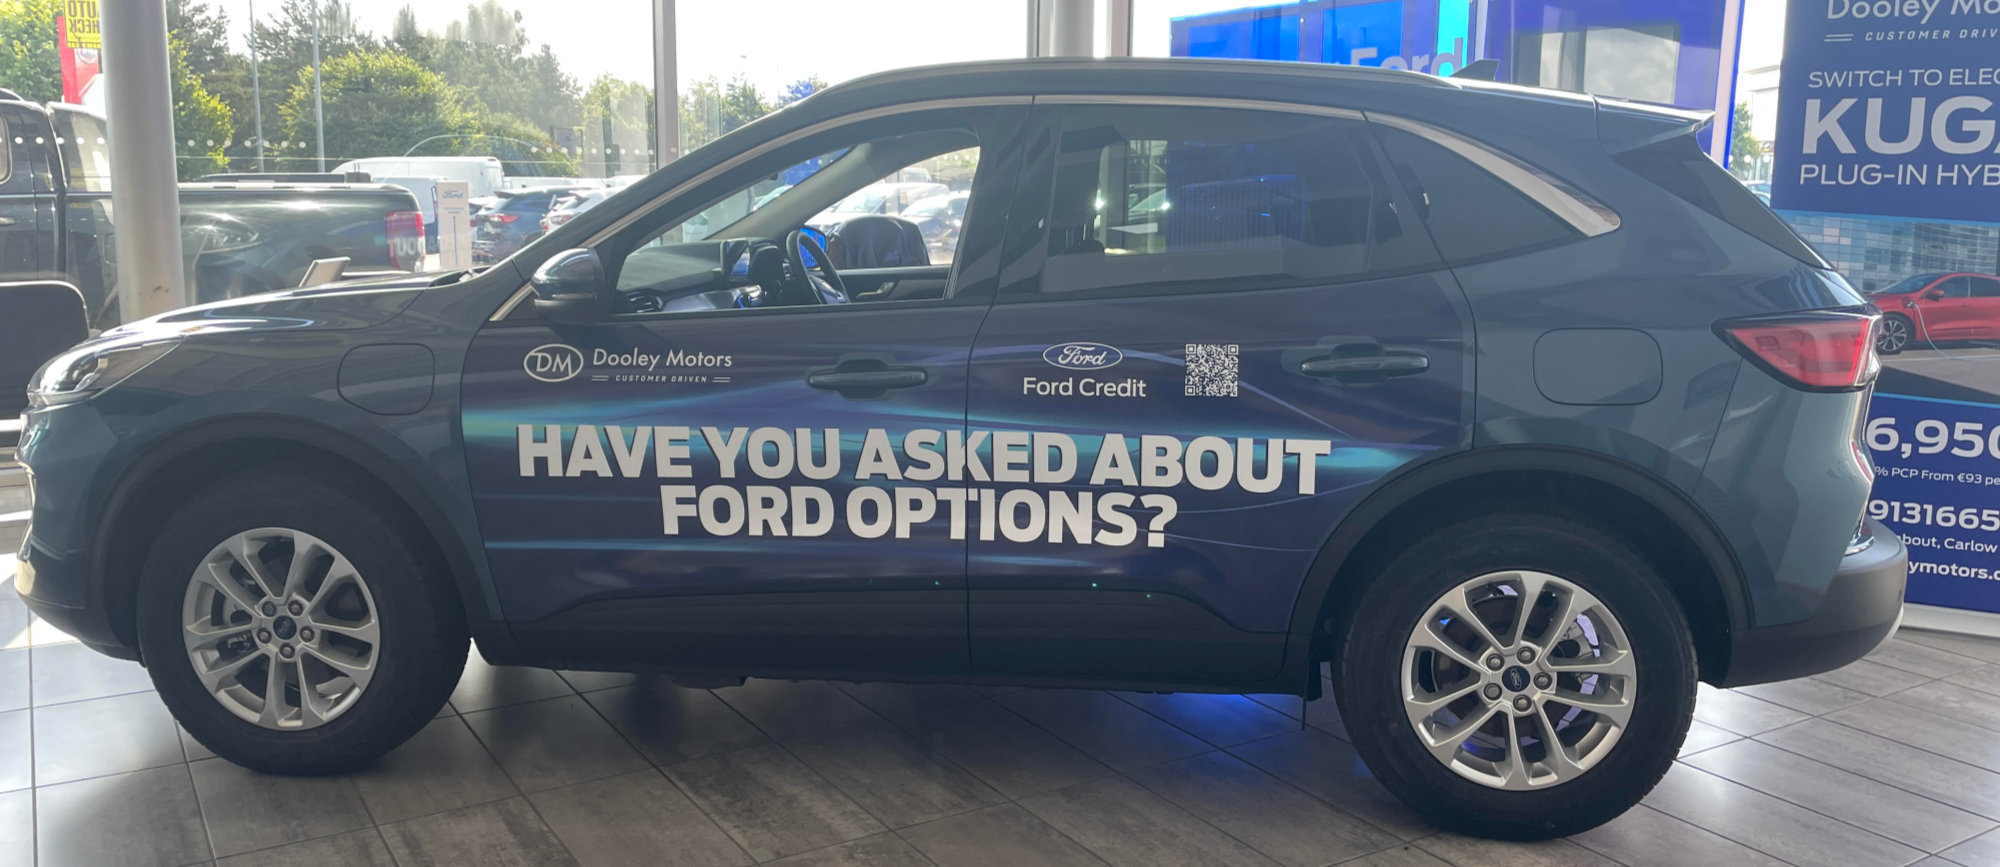 Ford Kuga Options Dooley Motors Ireland